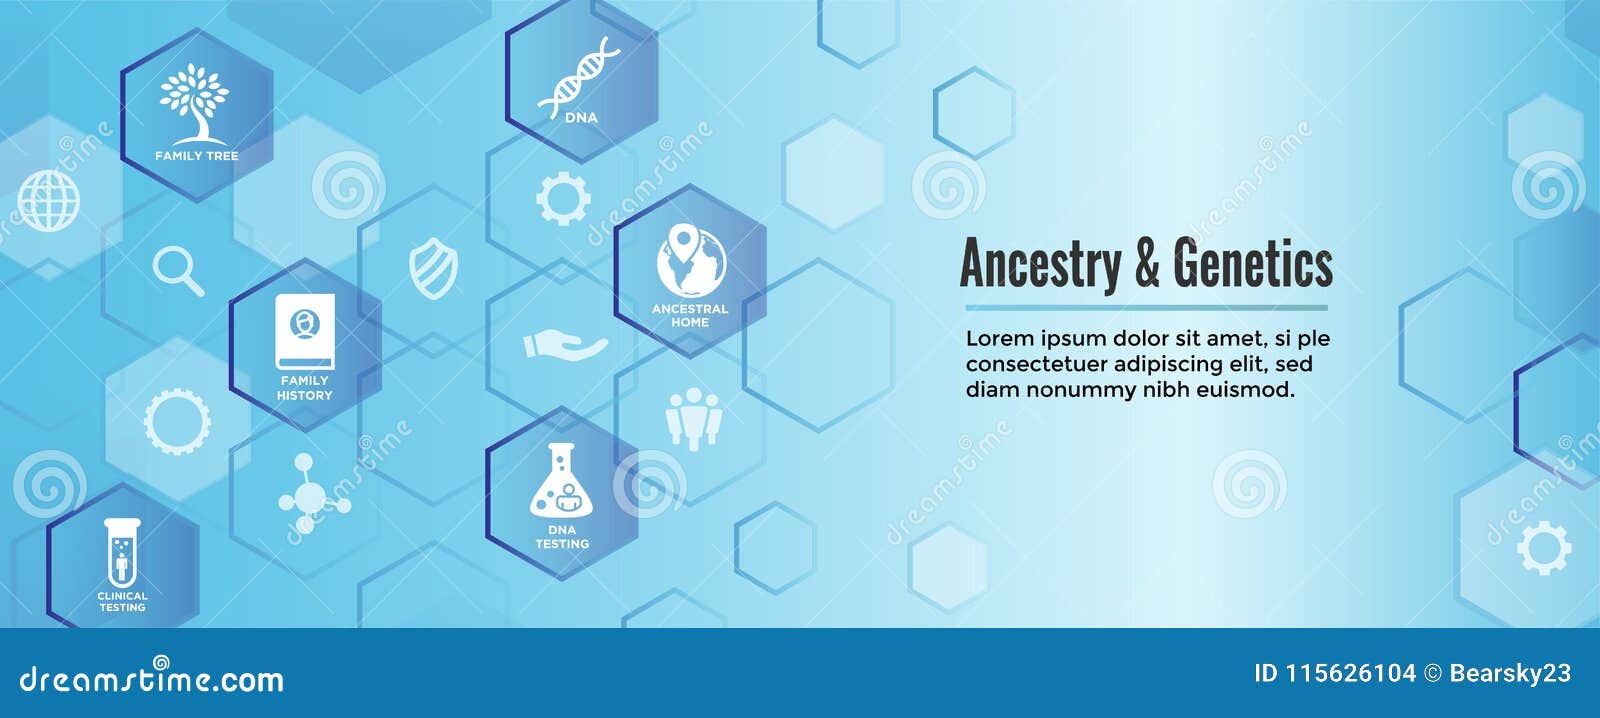 ancestry or genealogy icon set web banner w family tree album, f